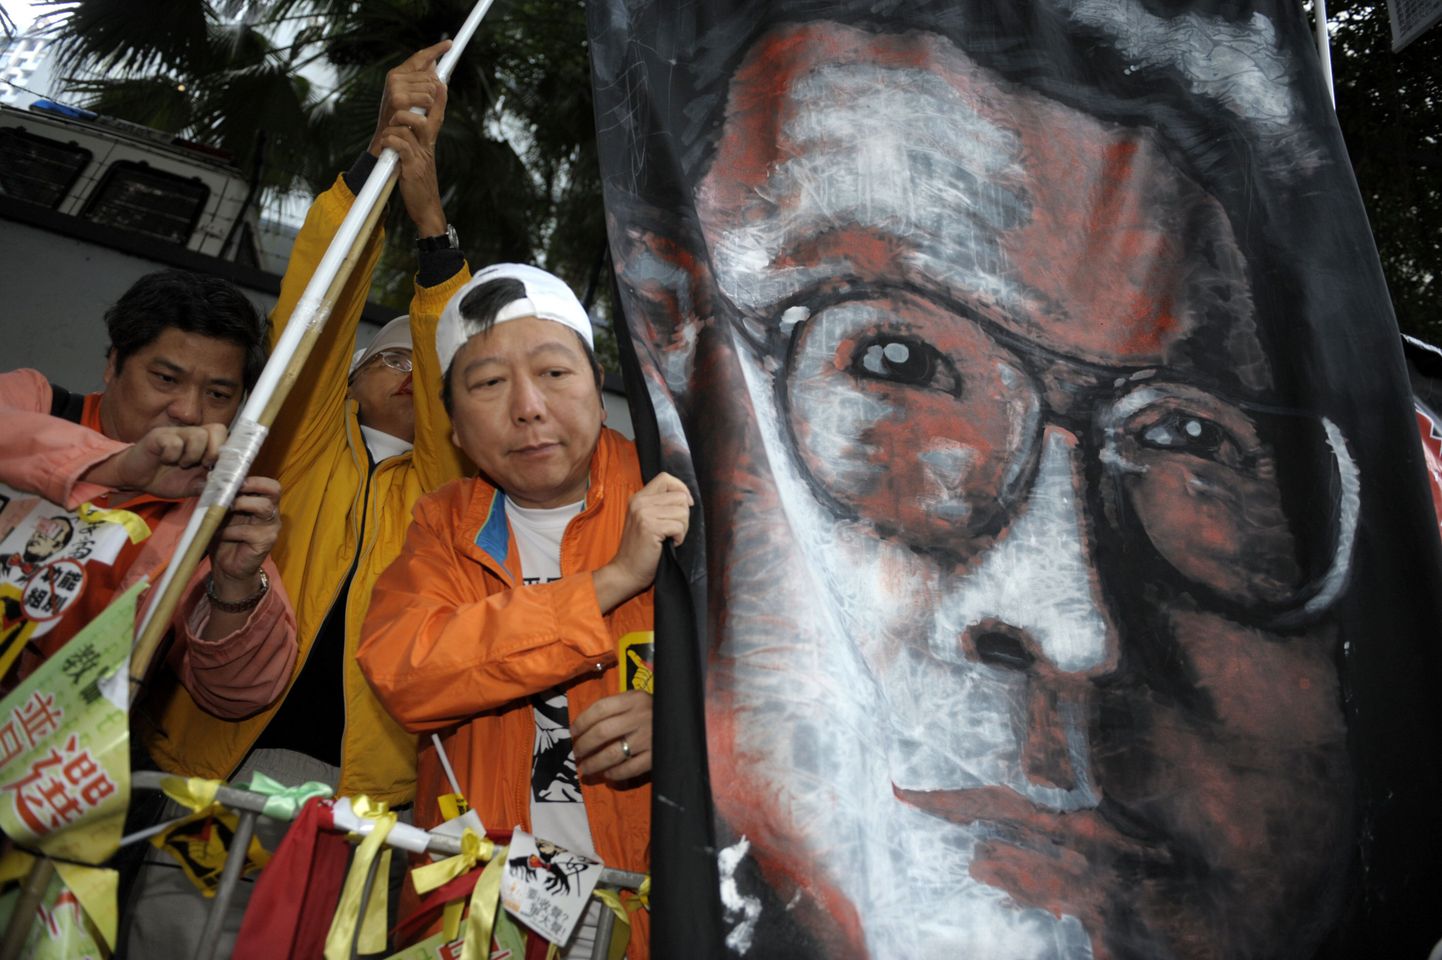 Liu Xiaobo vabastamist nõudev plakat.